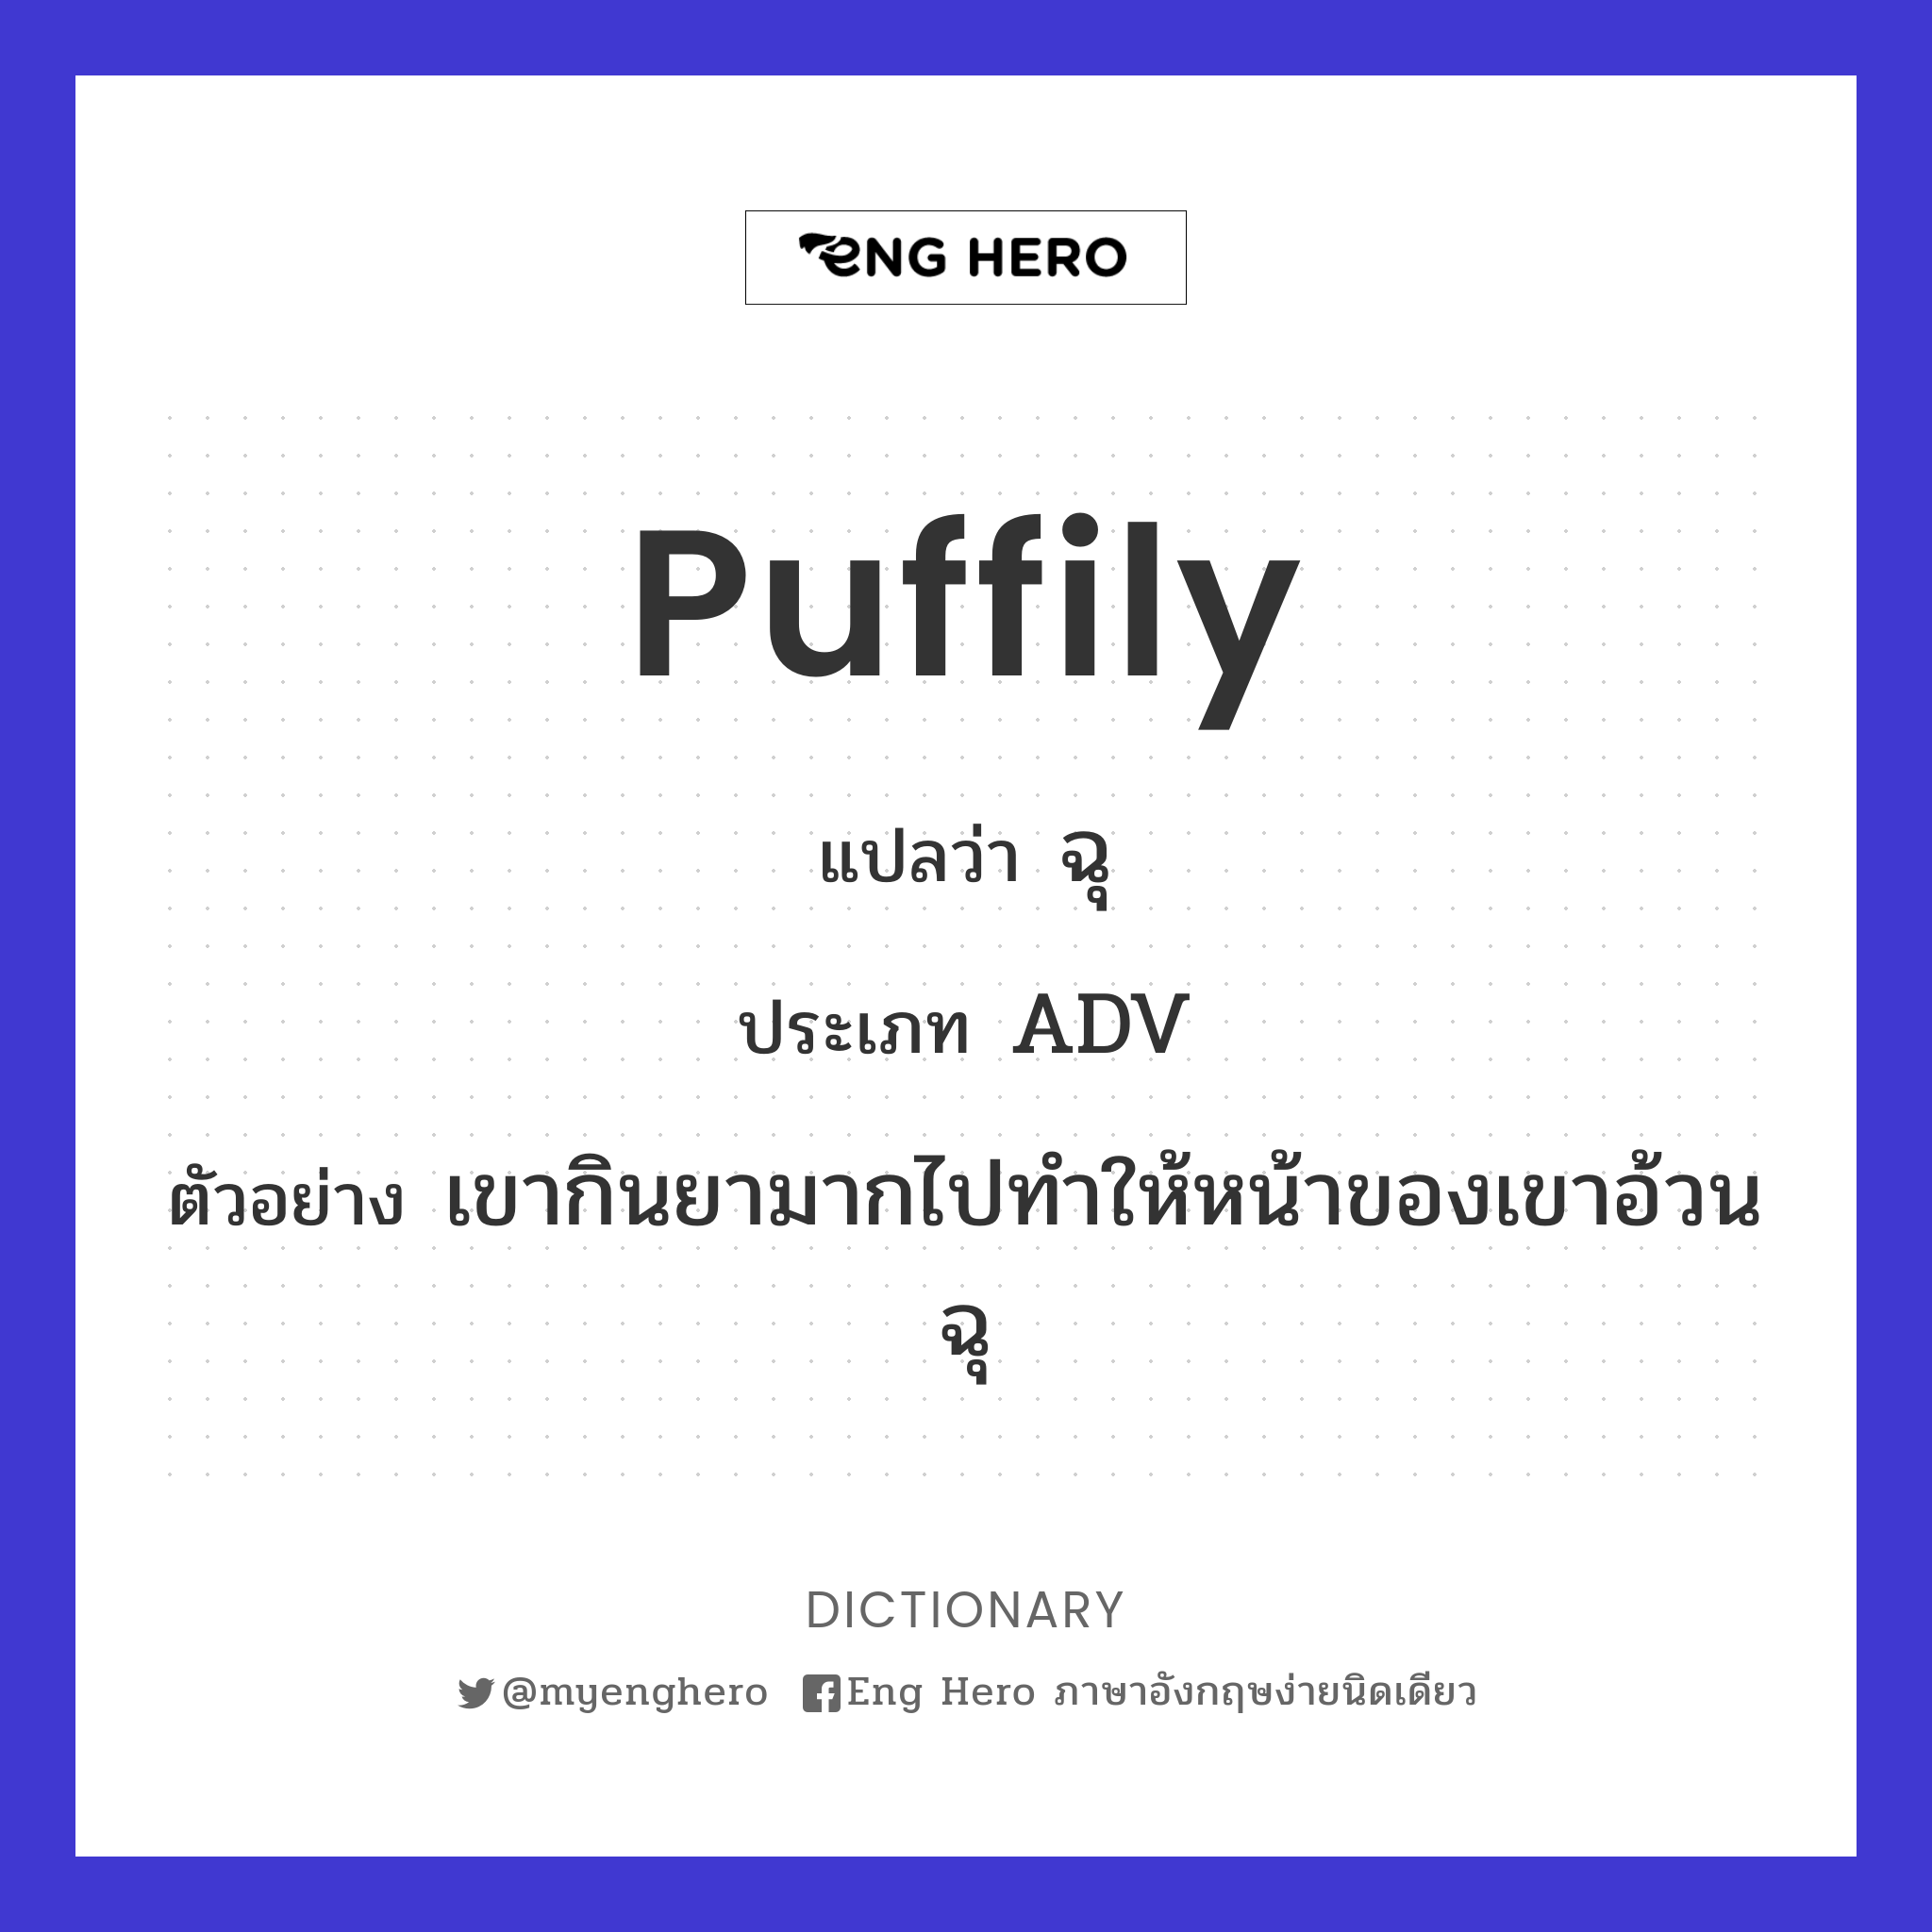 puffily